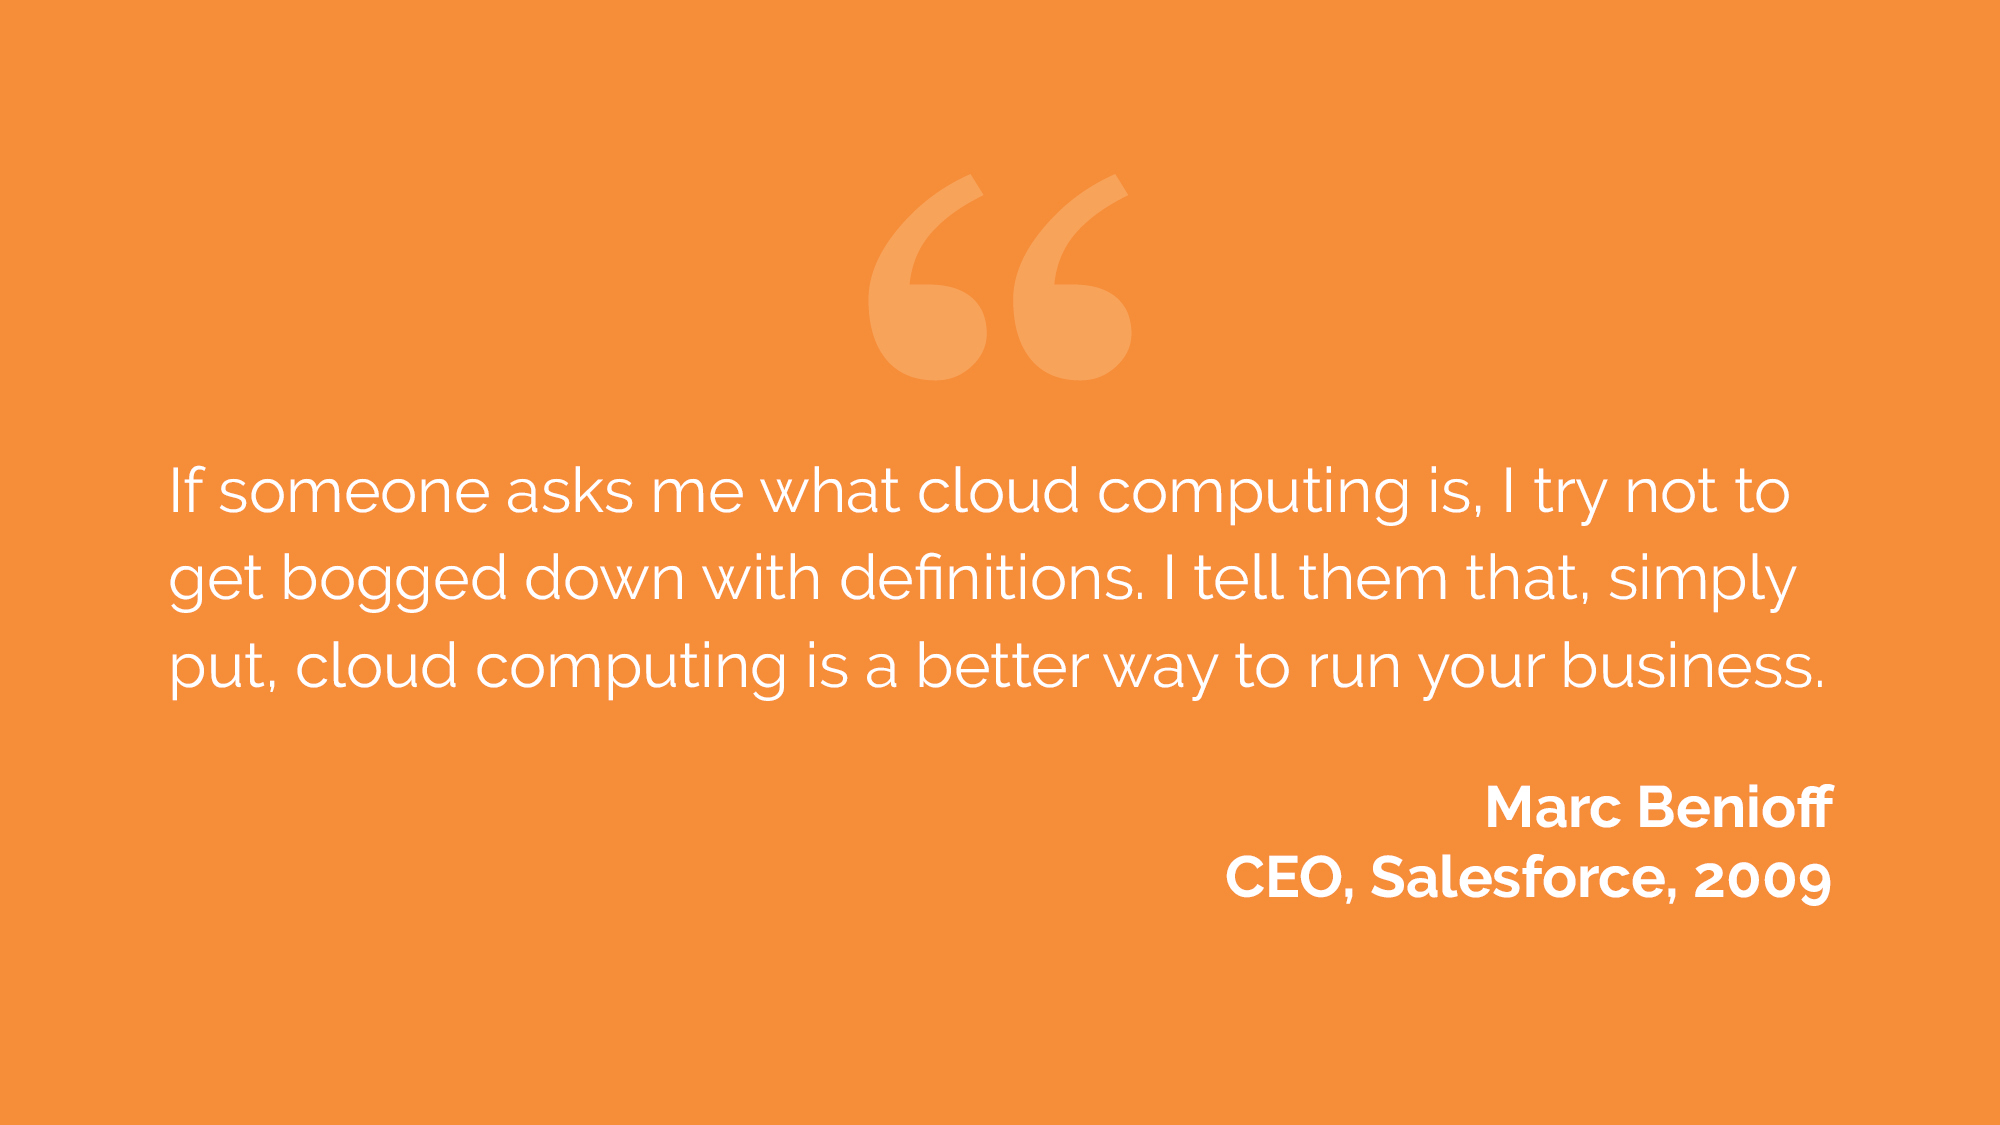 Marc Benioff Salesforce - cloud computing